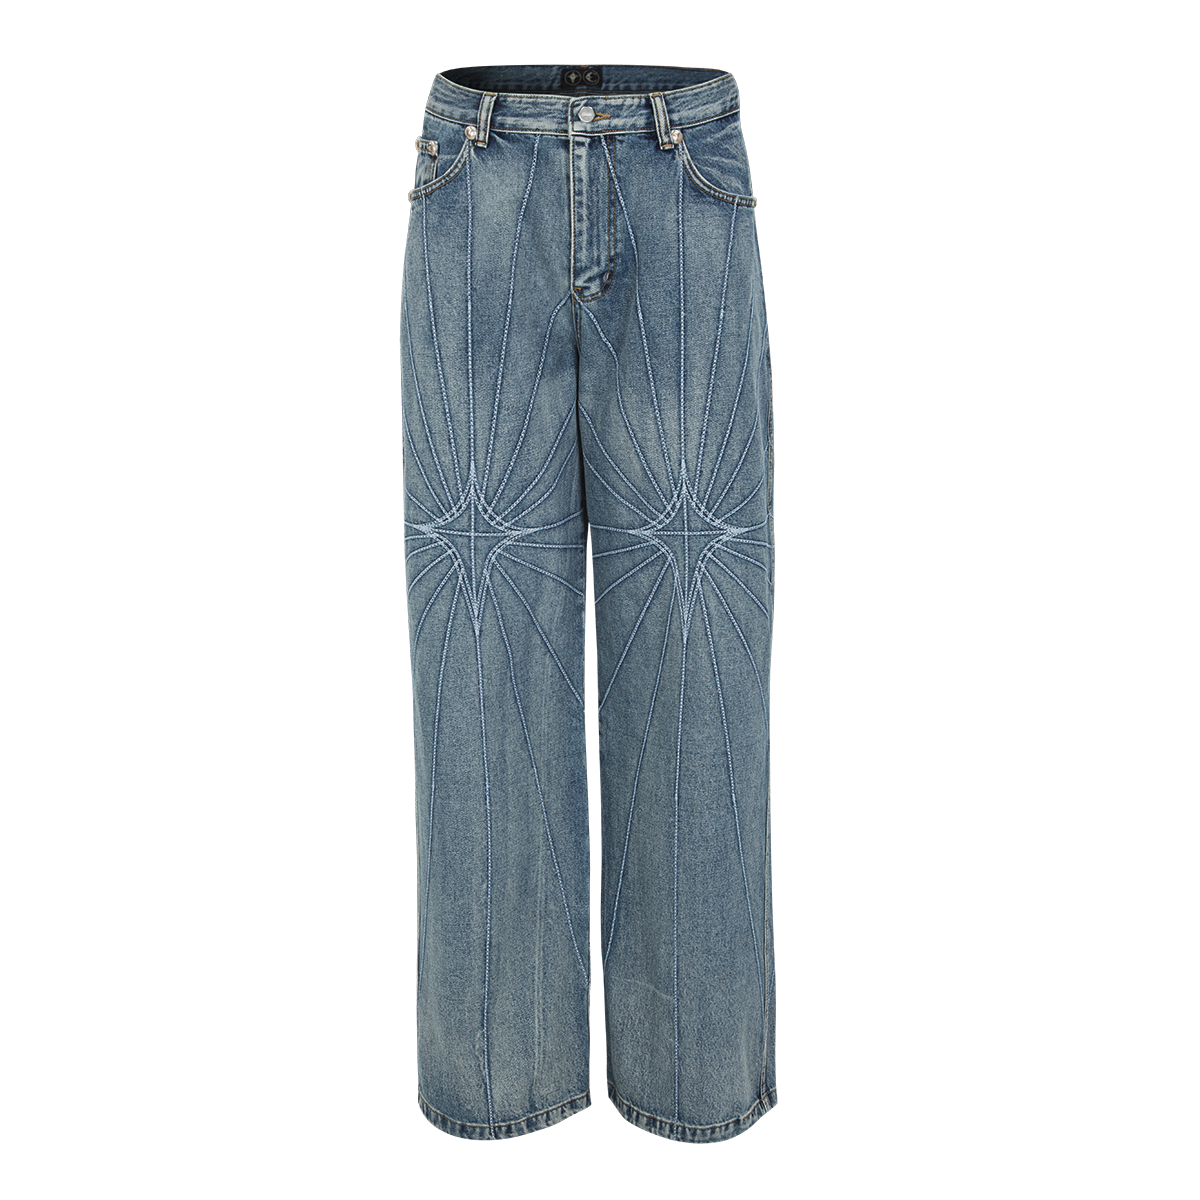 Chain Stitch Denim Pants (Pre Order)